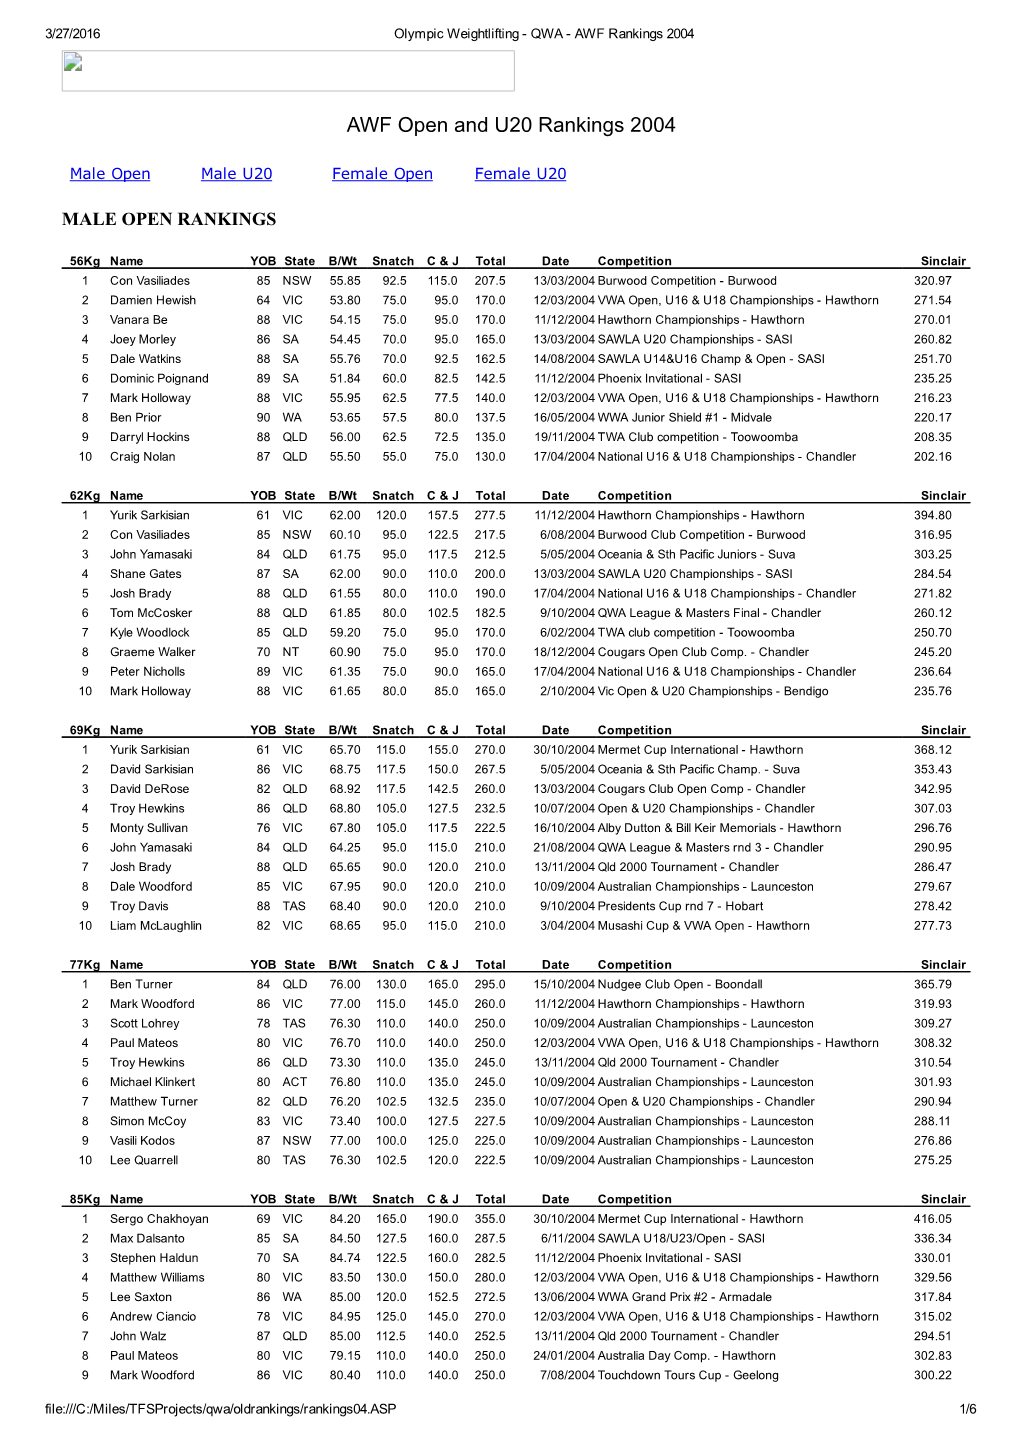 AWF Open and U20 Rankings 2004